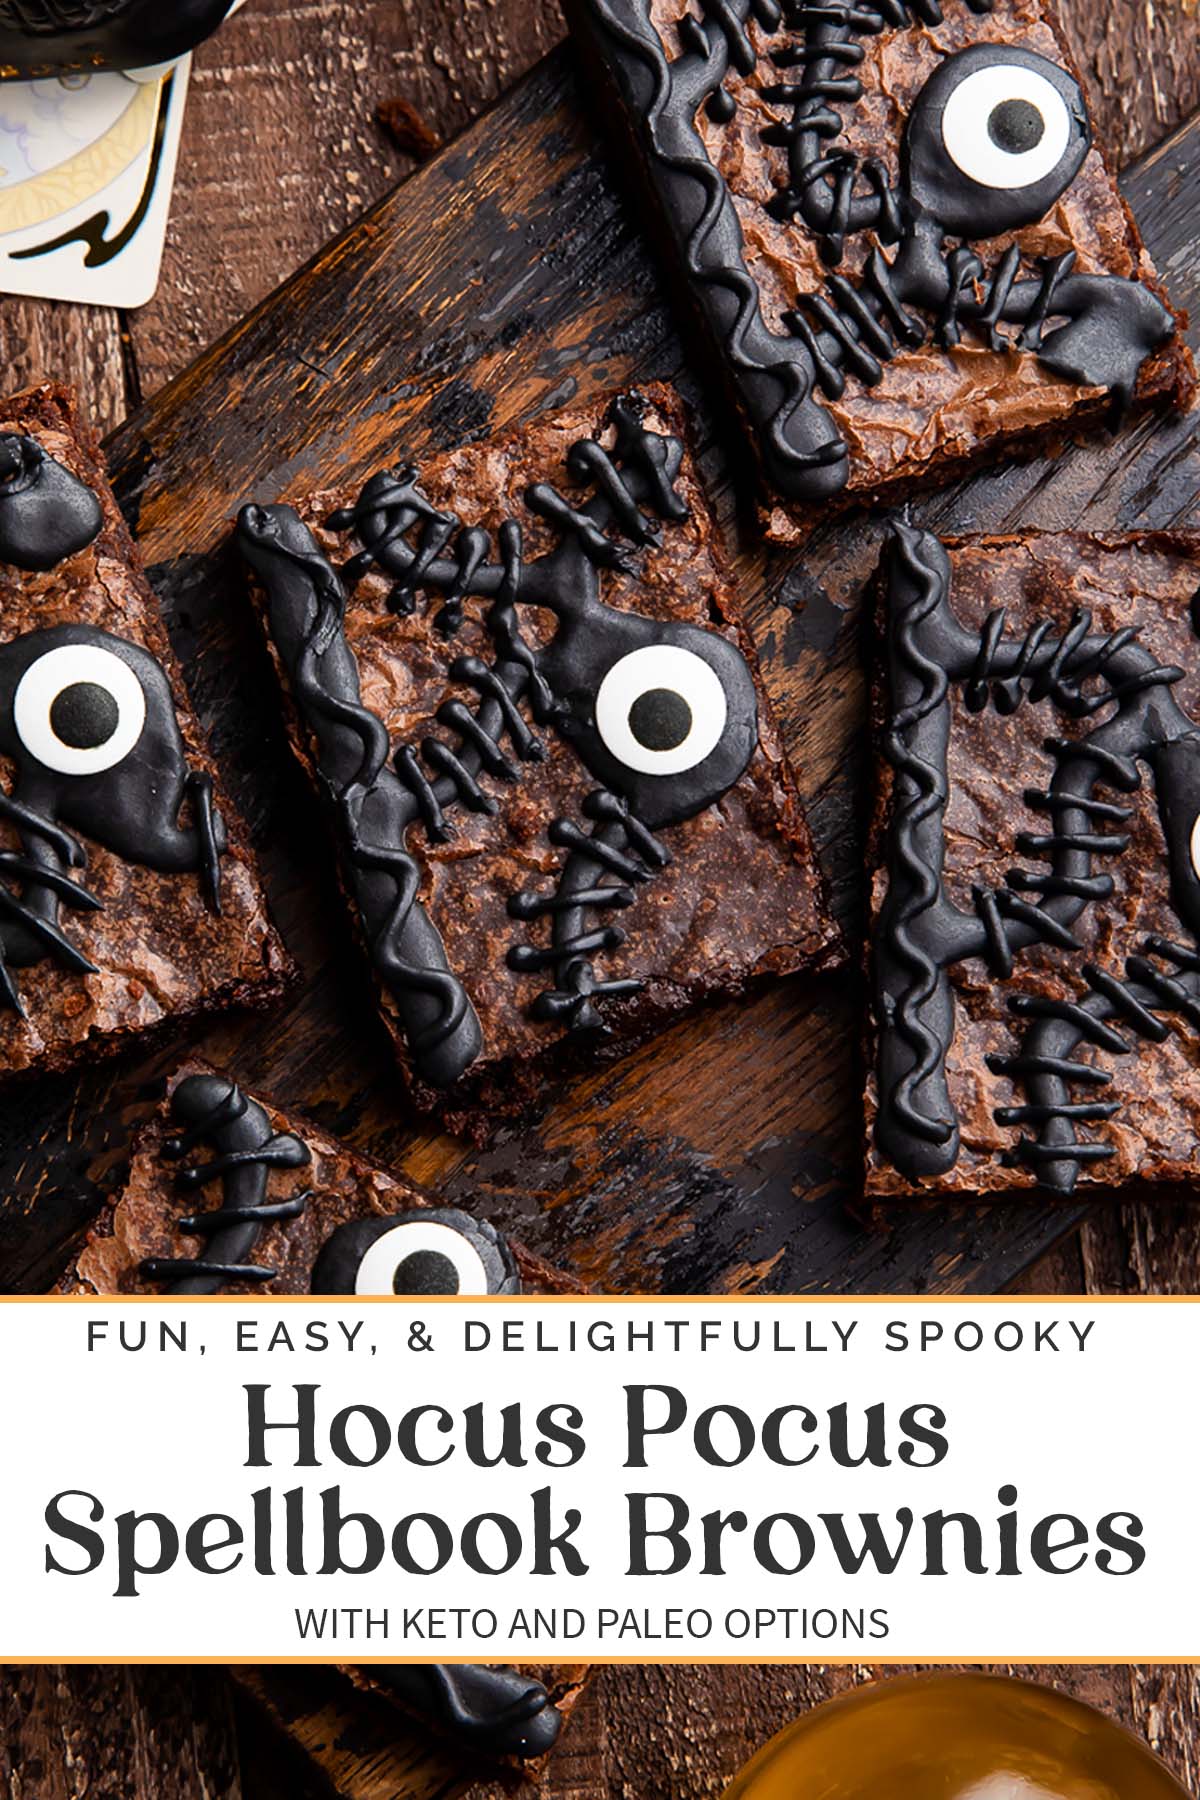 Pin graphic for Hocus Pocus spellbook brownies.